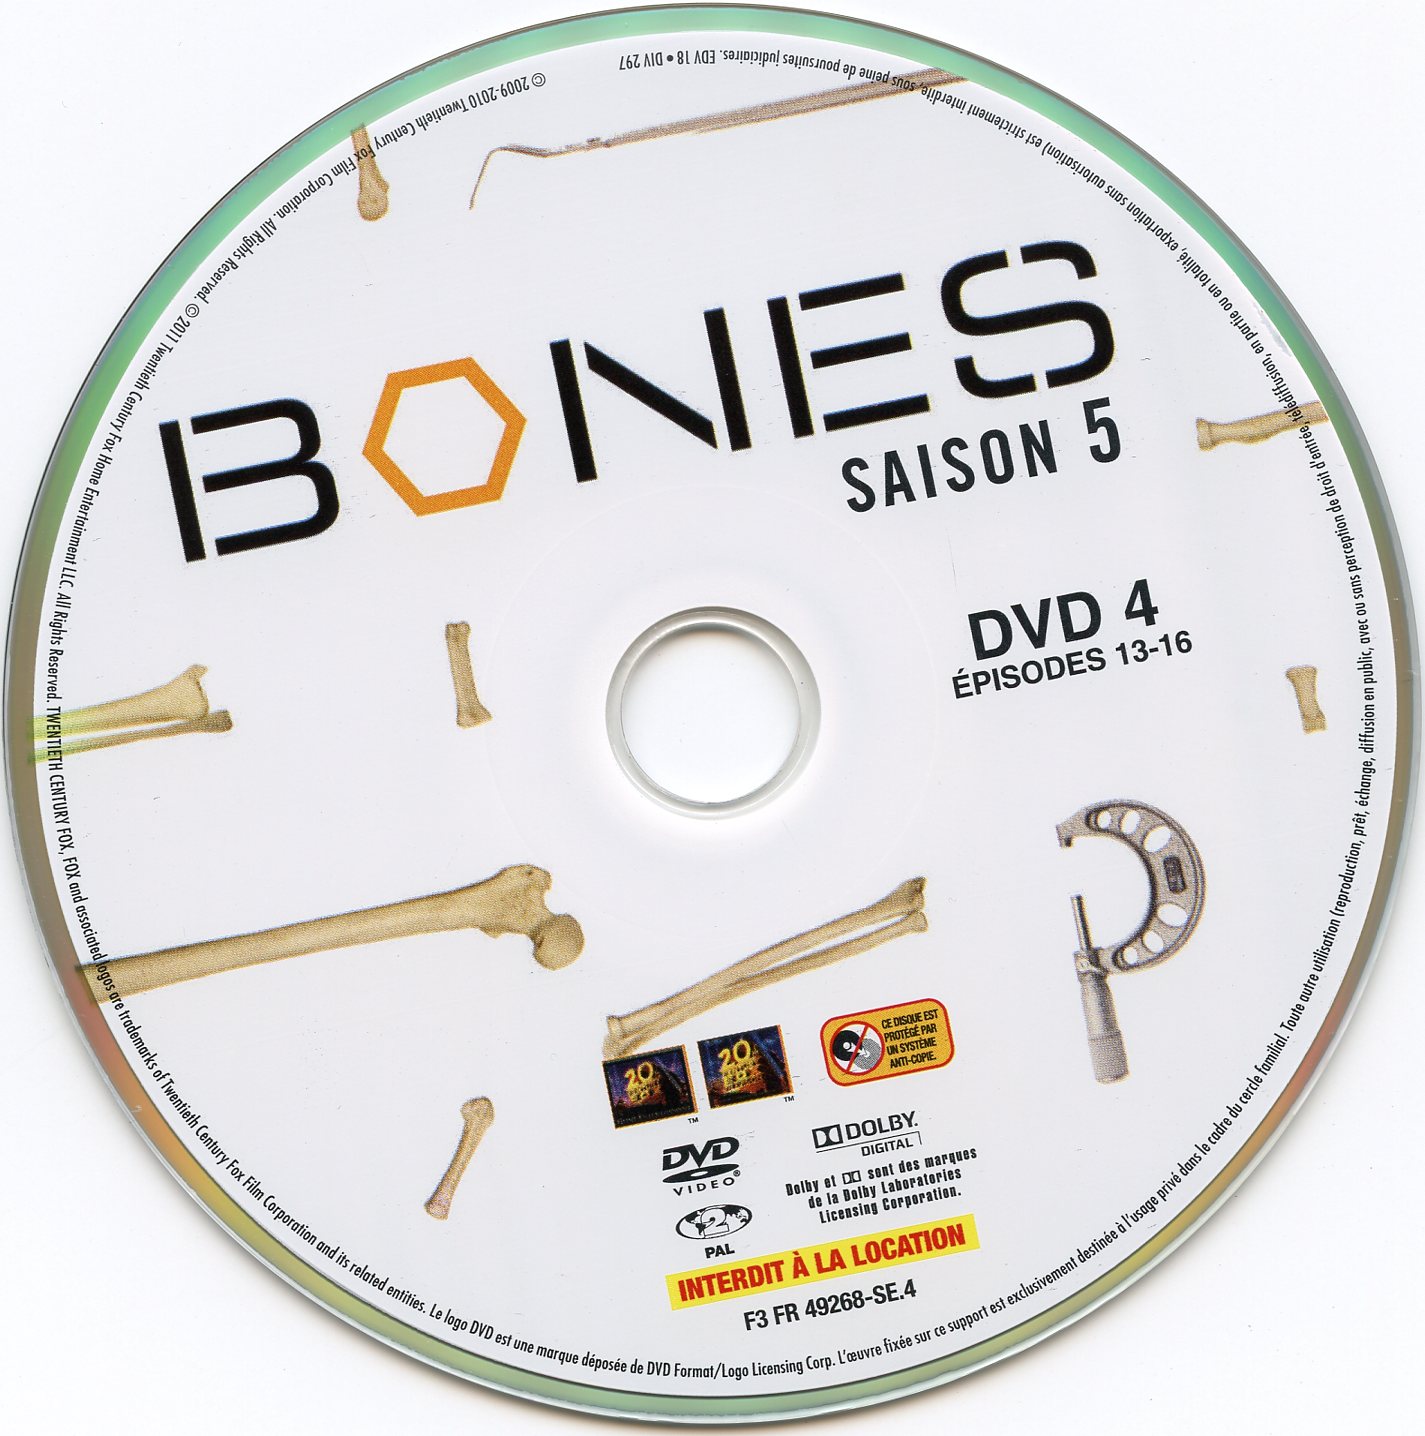 Bones Saison 5 DVD 4